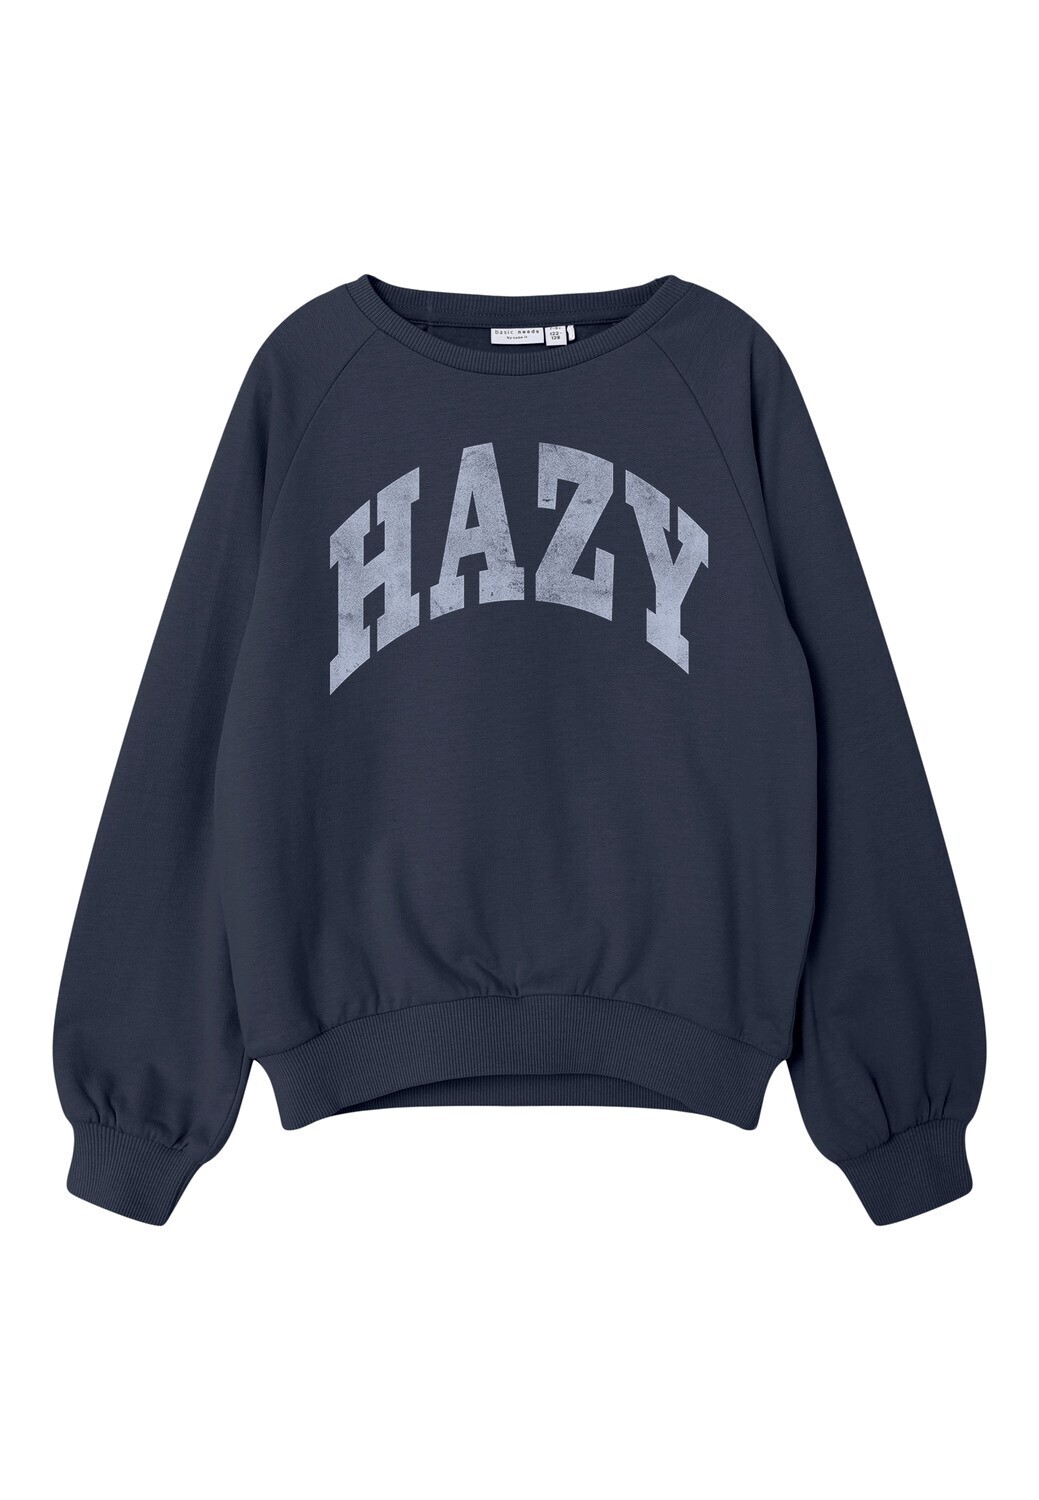 KIDS Trui sweater - VENUS - donkerblauw/hazy